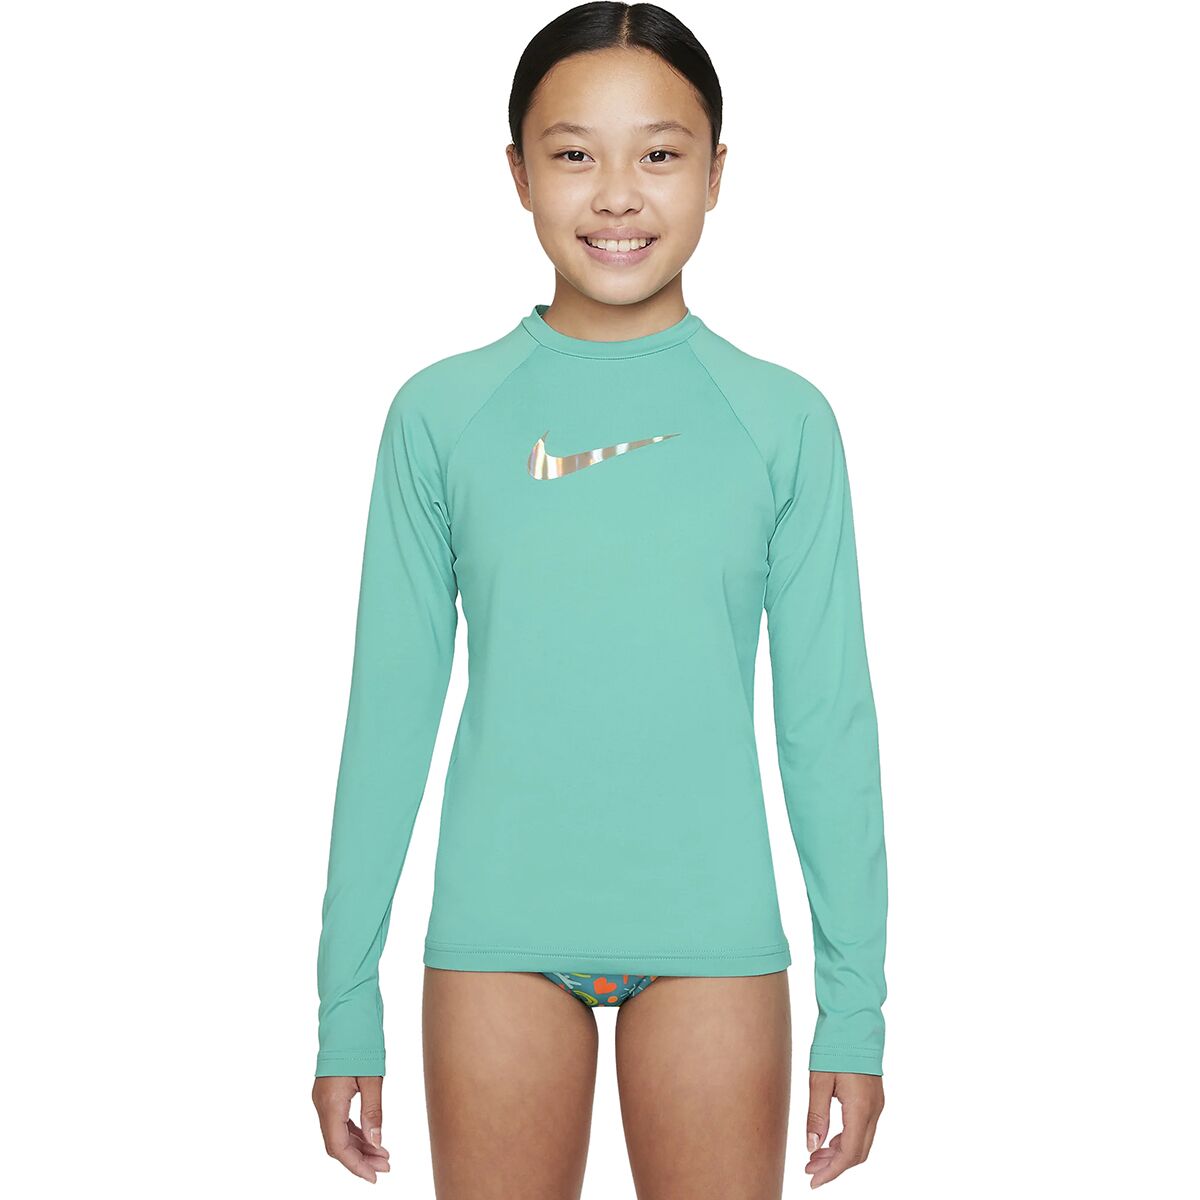 Nike Swim Hydrogua Long-Sleeve Rashguard - Girls'